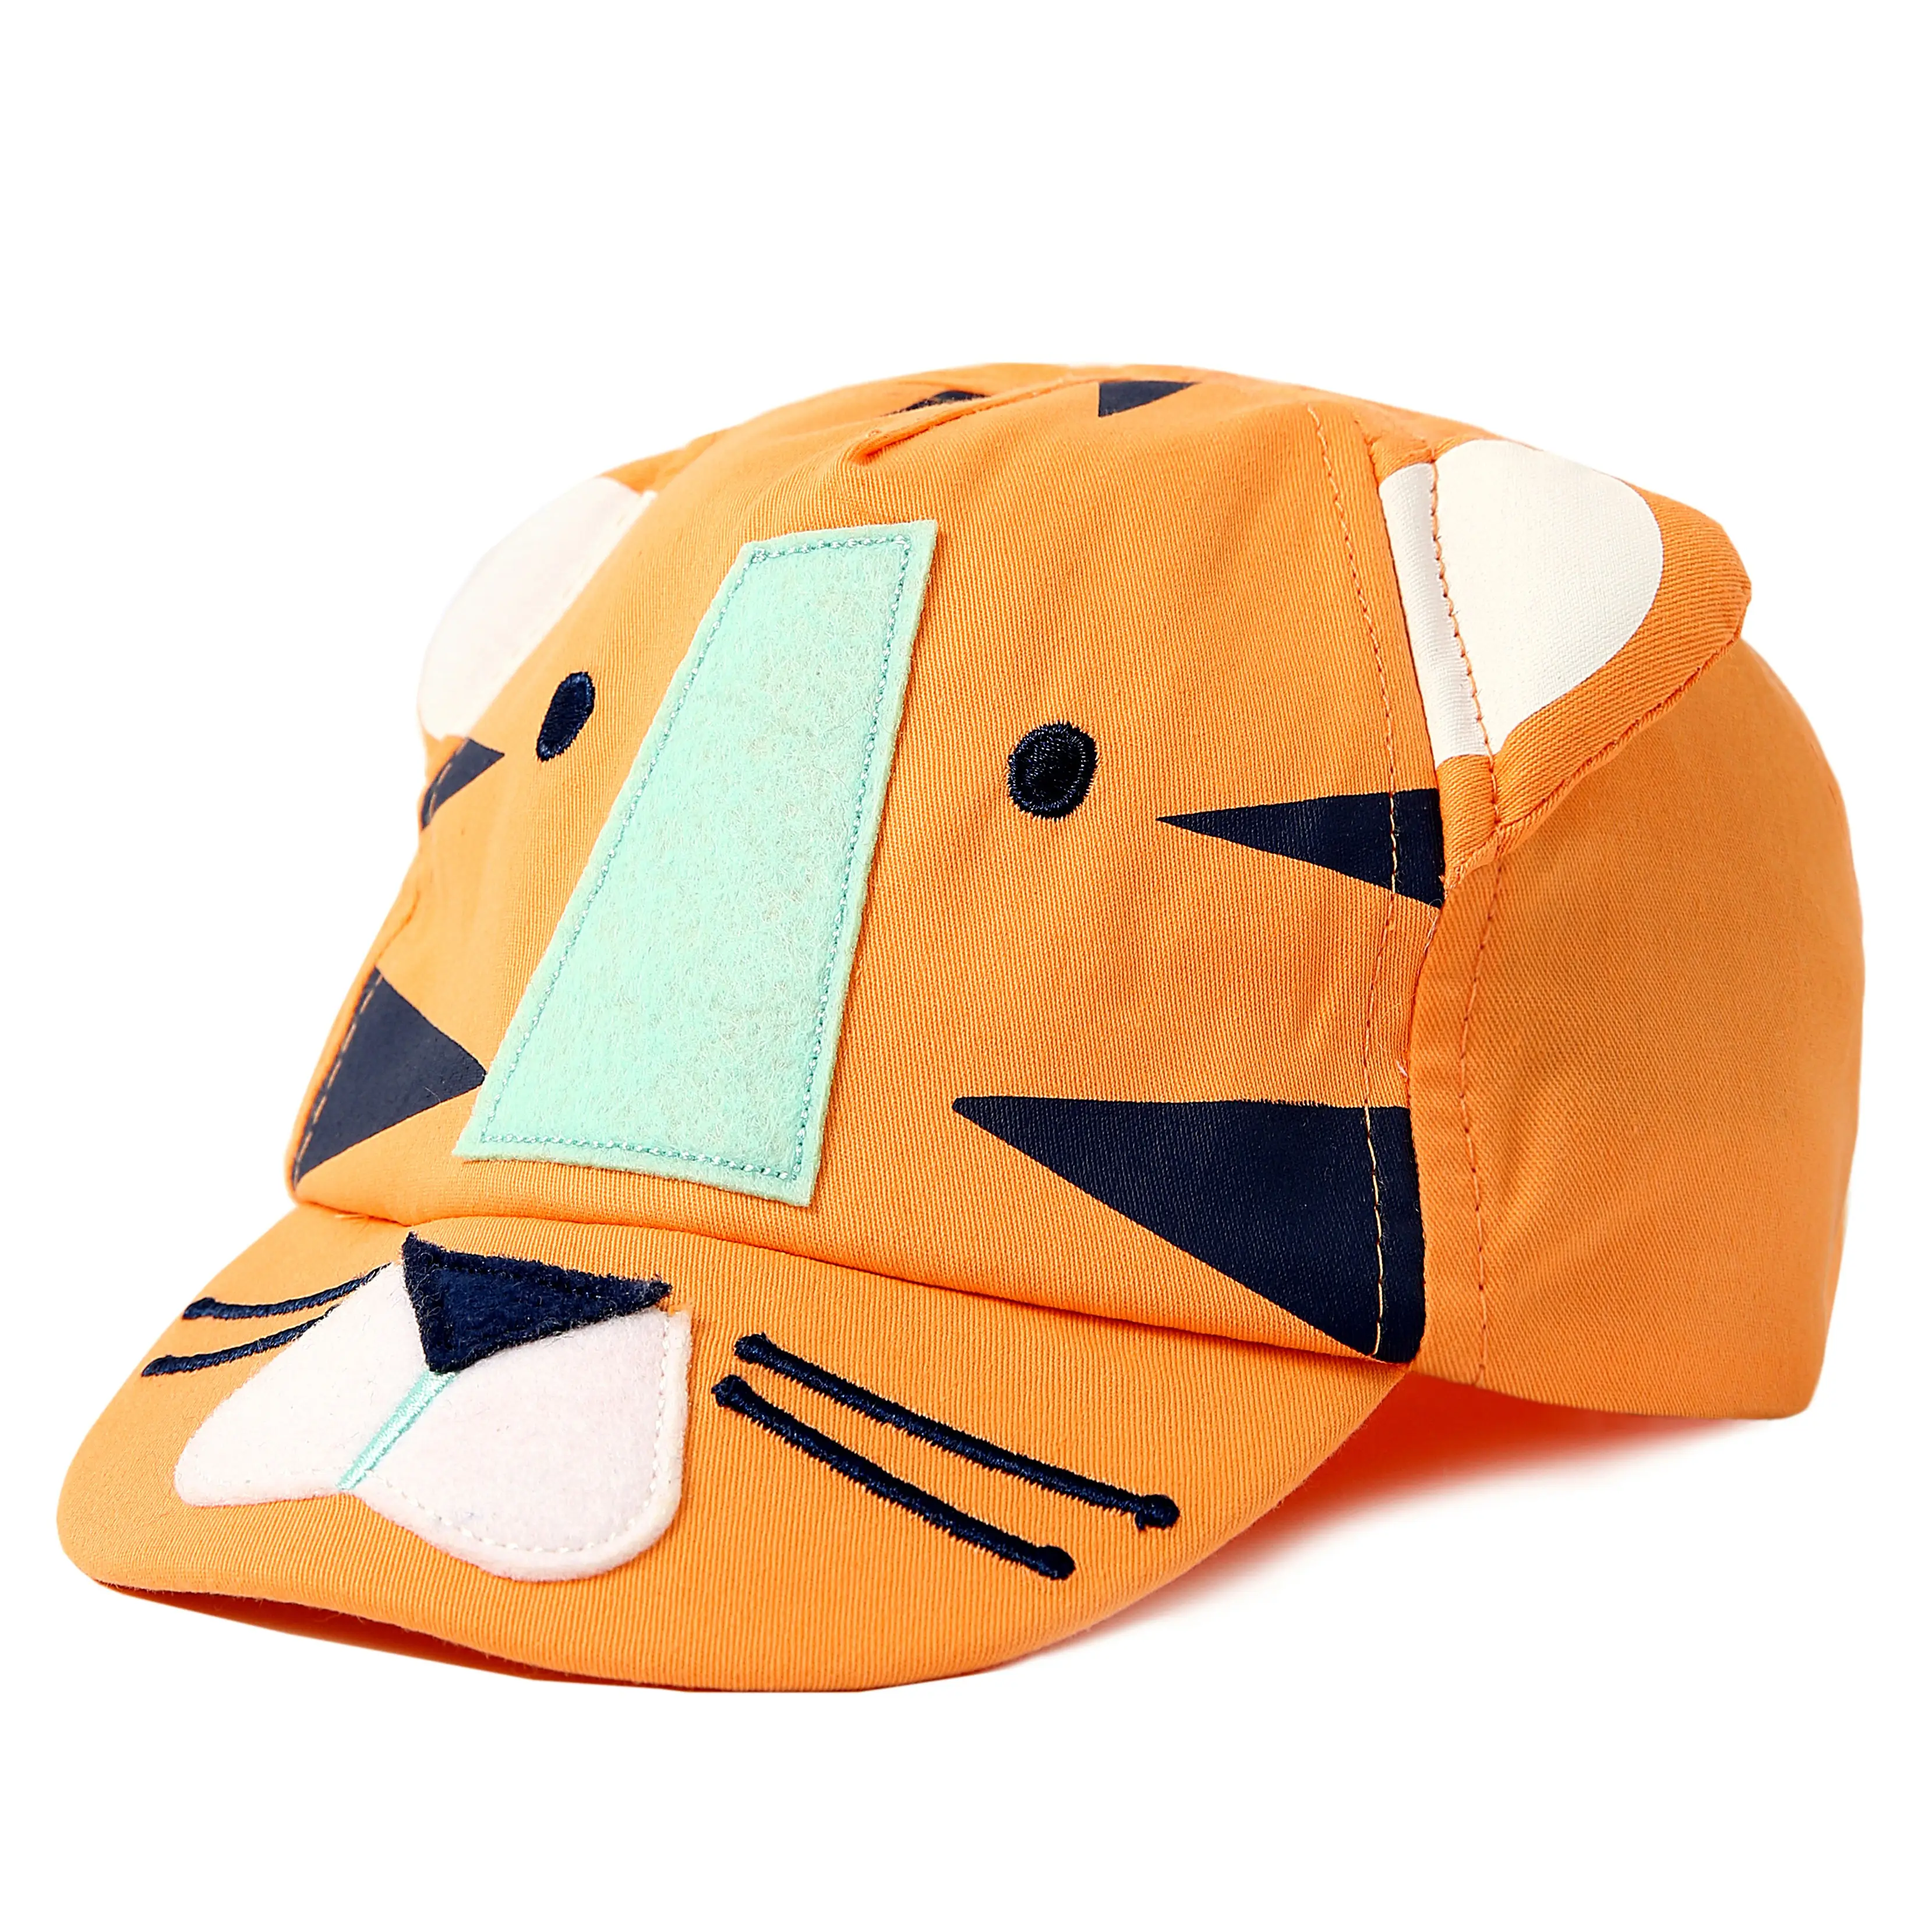 New Design Little Boys Girl Cotton Cartoon Tiger Design Baseball Cap Hats Baby Sun Protection Caps For Toddler Kids